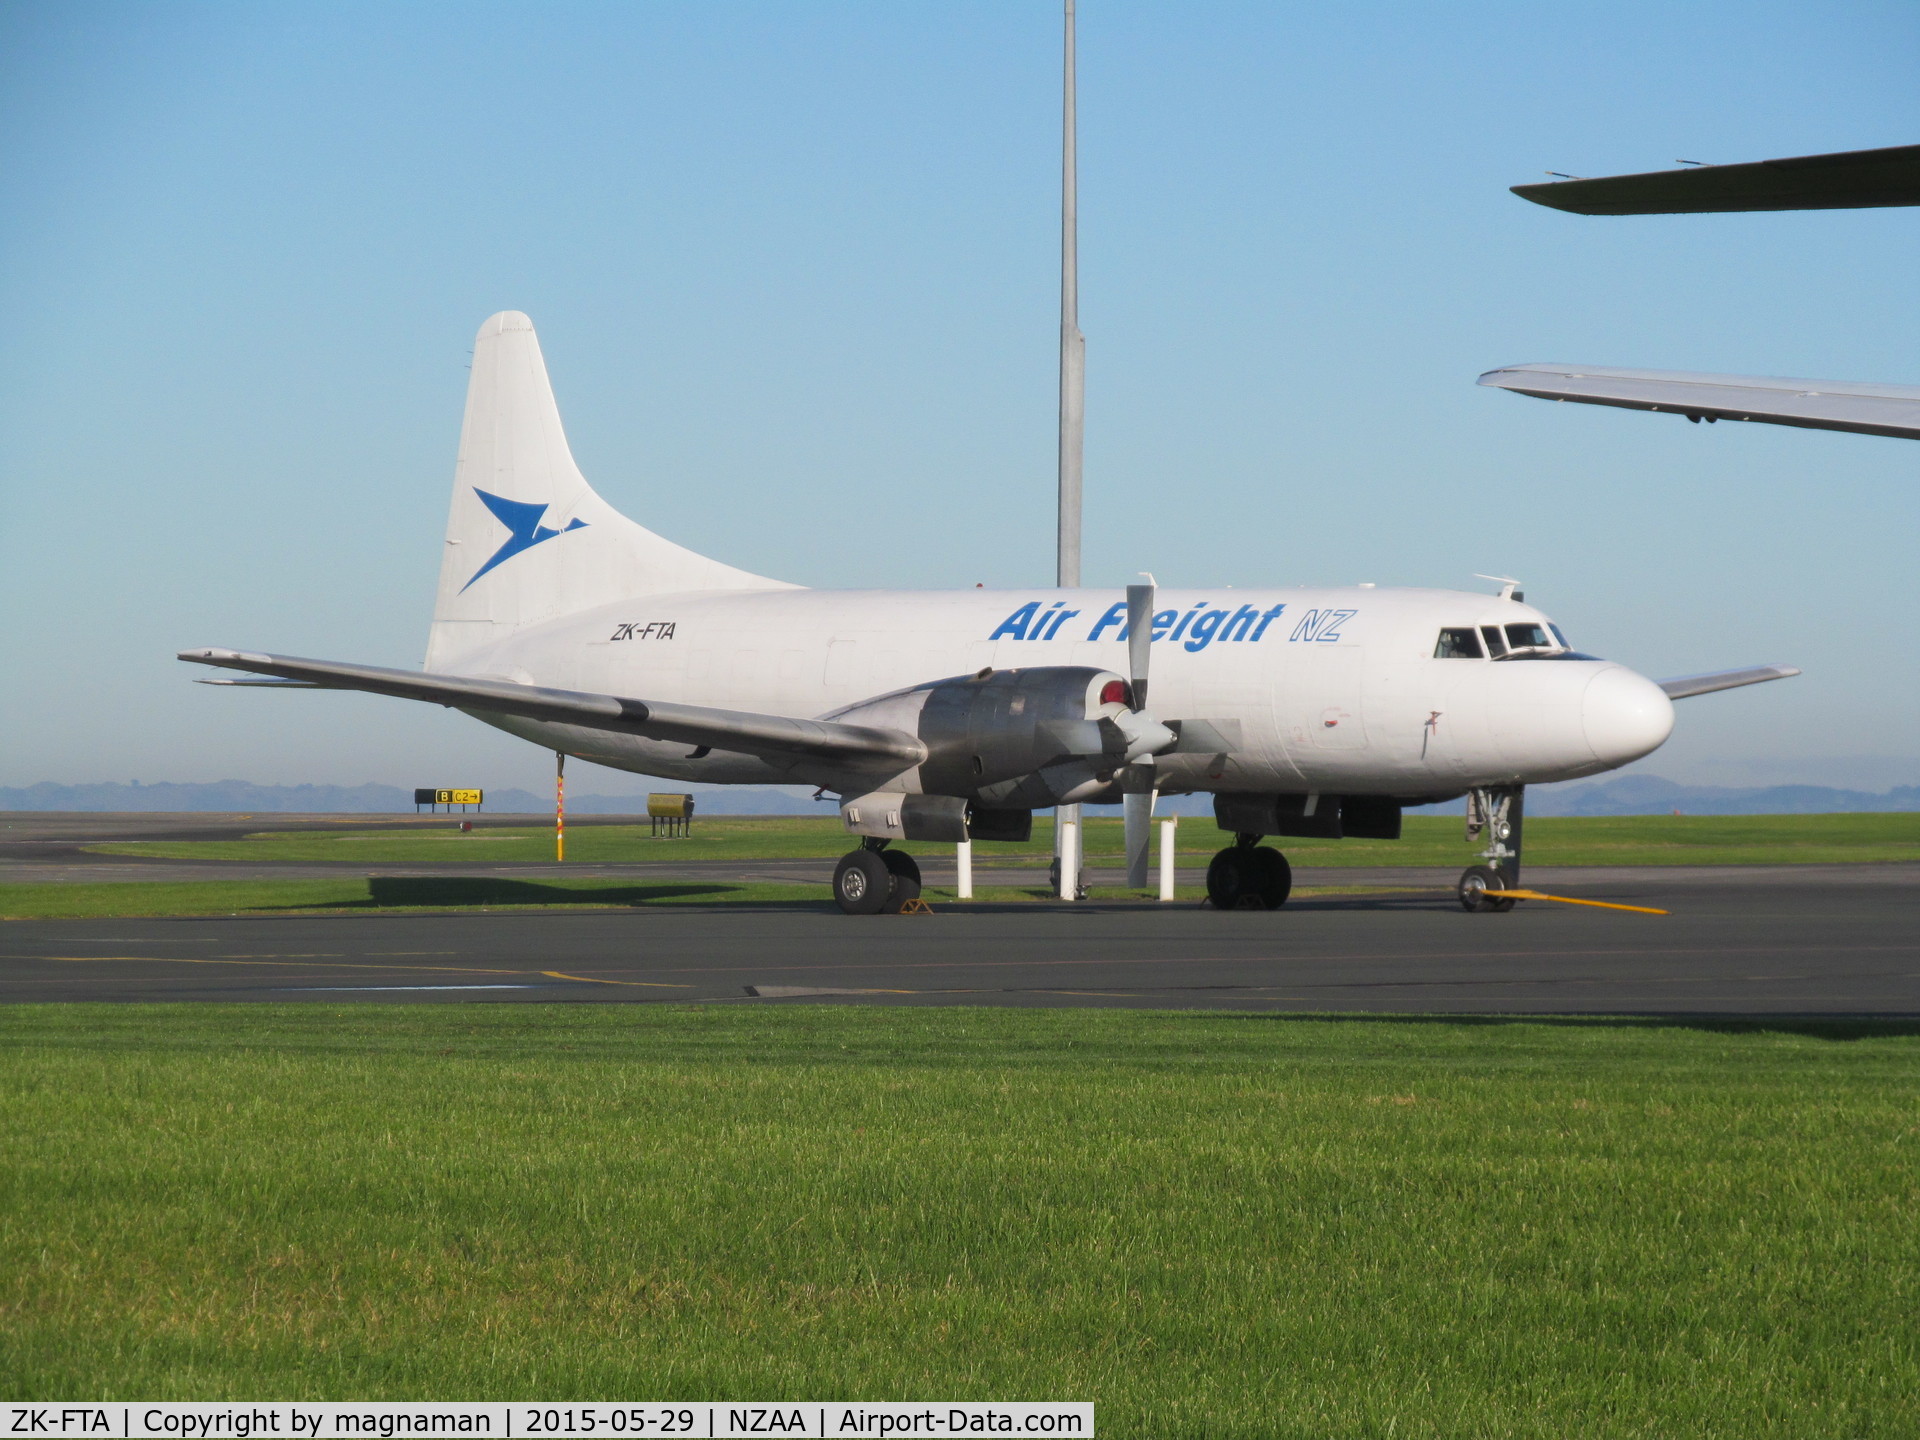 ZK-FTA, Convair 580(F) C/N 168, on home apron - akl